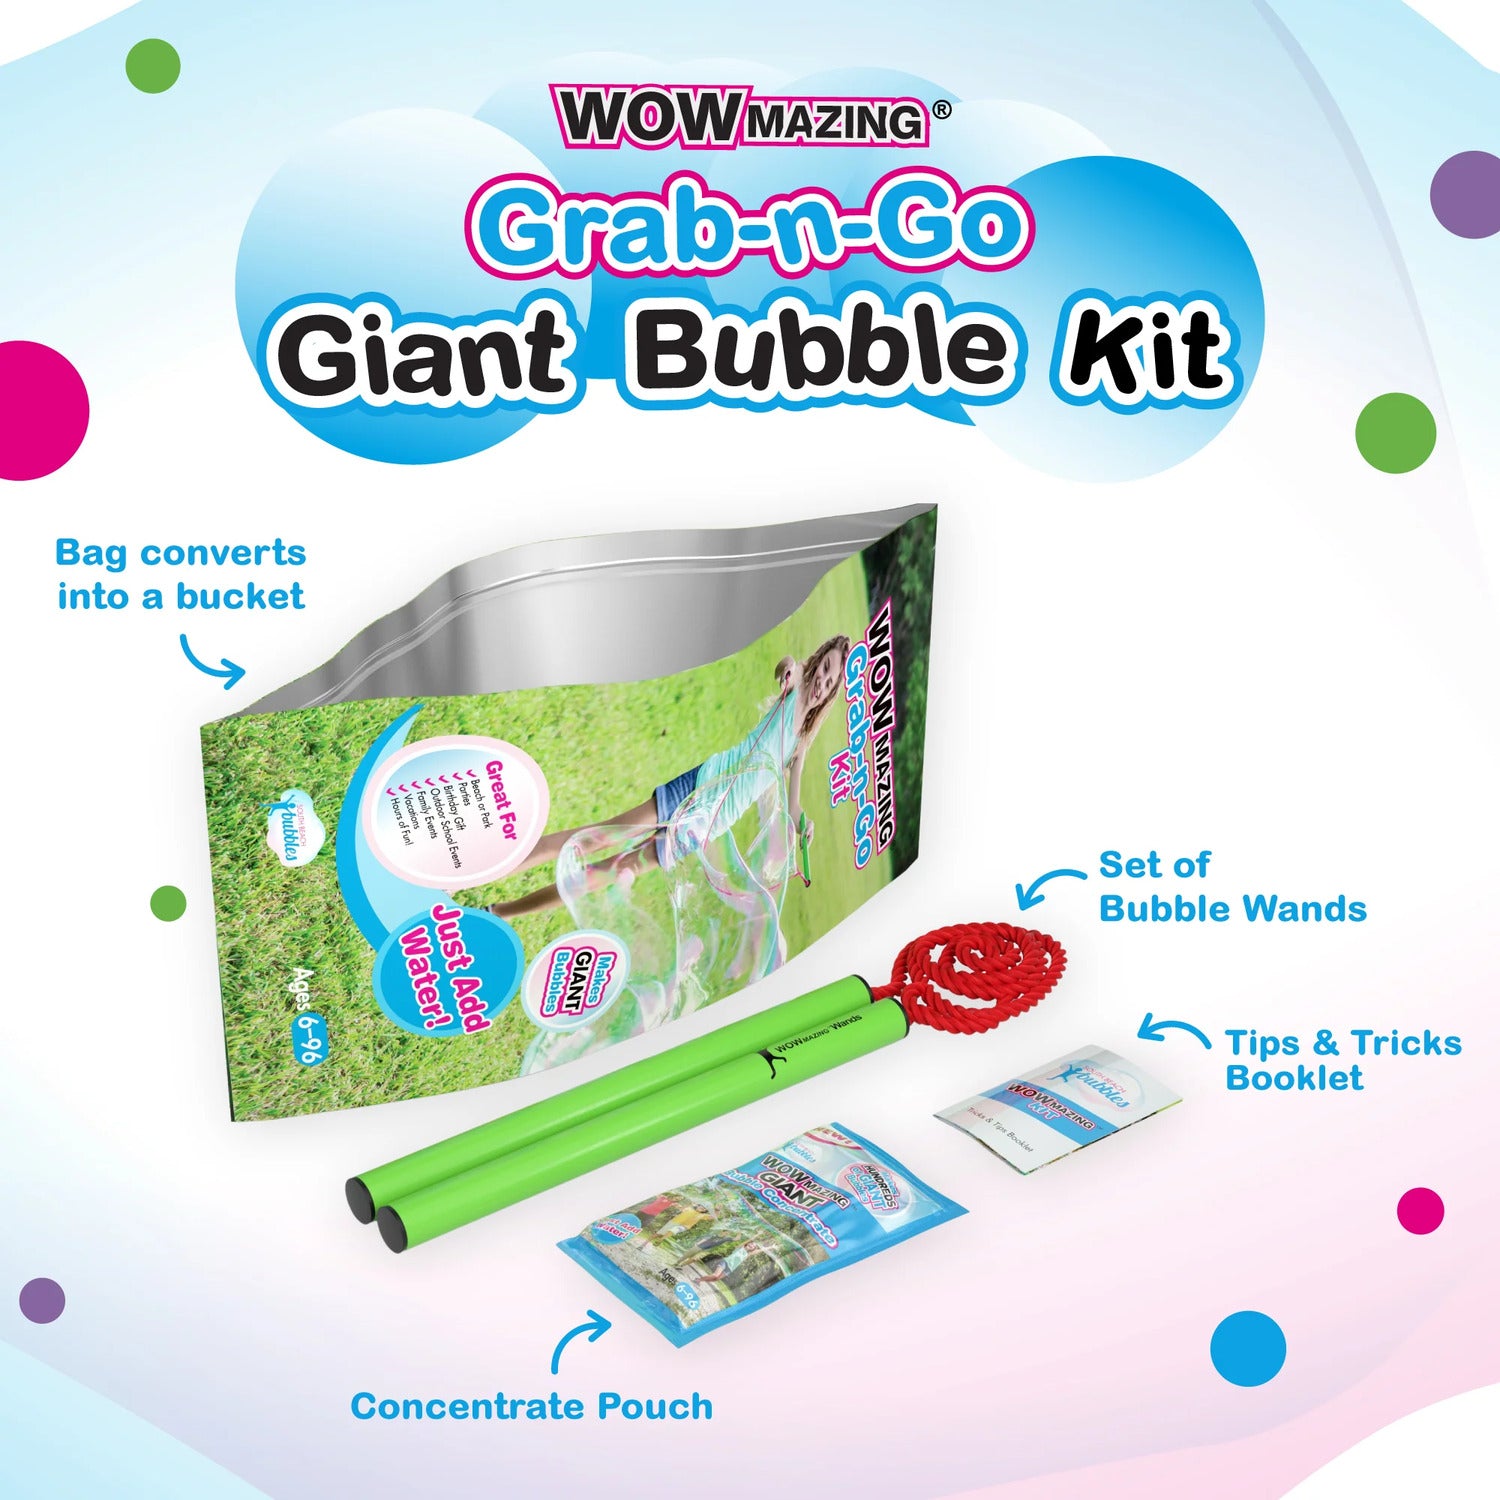 WOWmazing Grab-n-Go Giant Bubble Kit